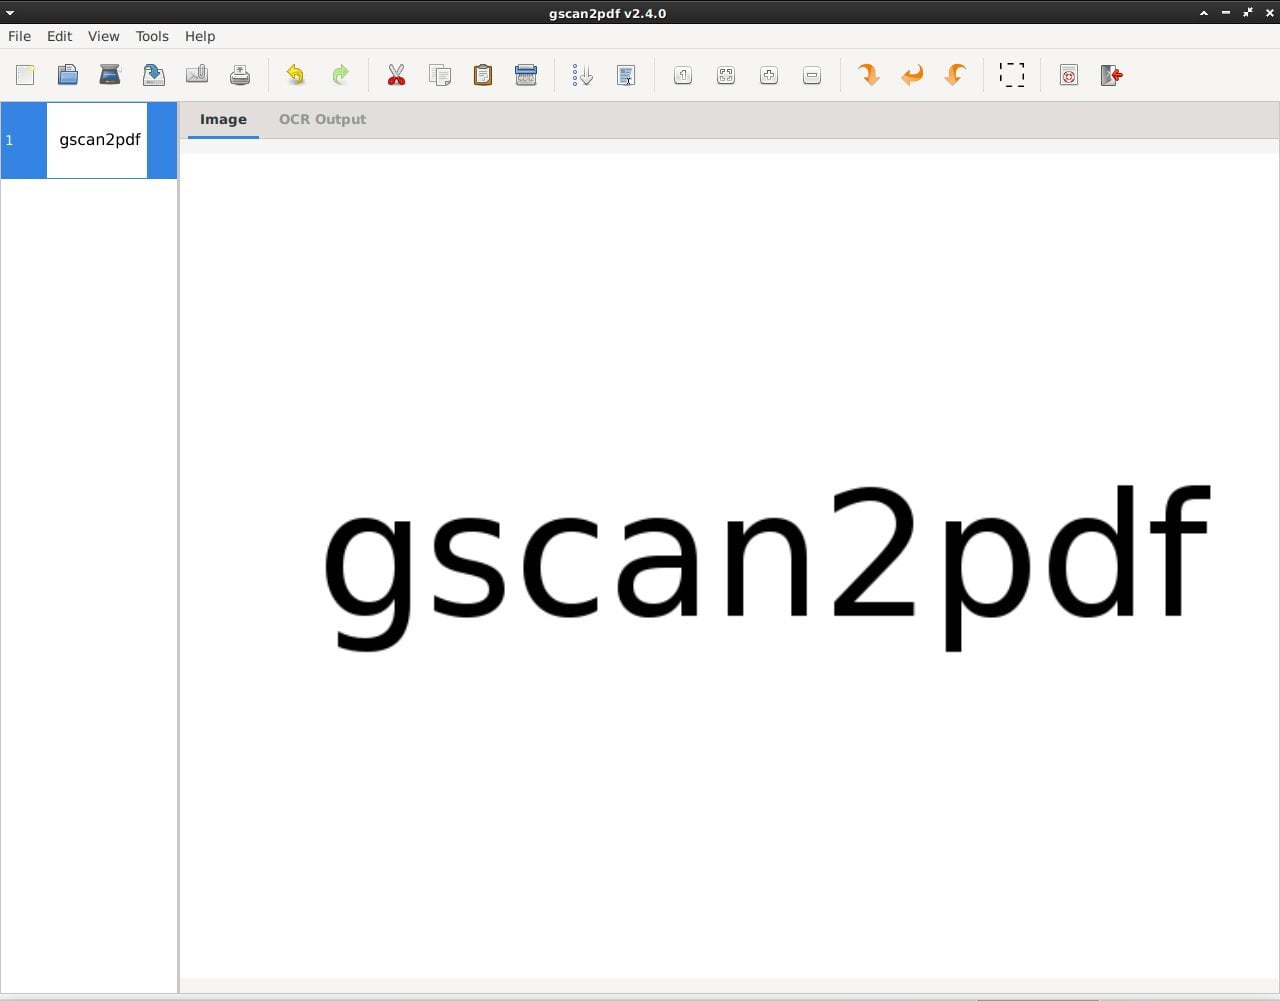 Gscan2PDF 2.5.5 Lançado - Confira as novidades e instale